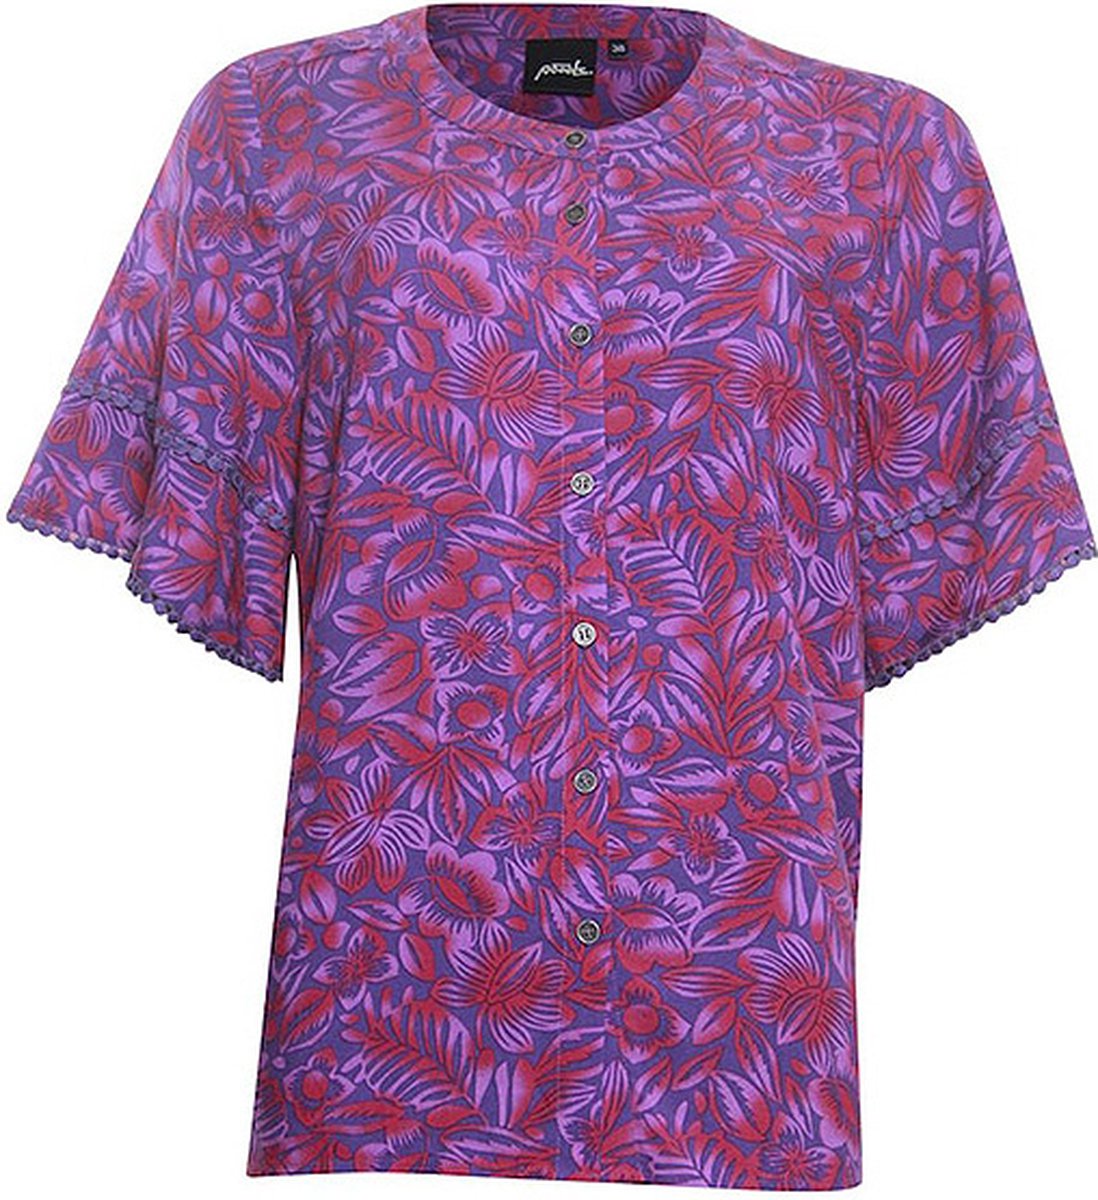 Poools blouse 323126 - Purple flower print